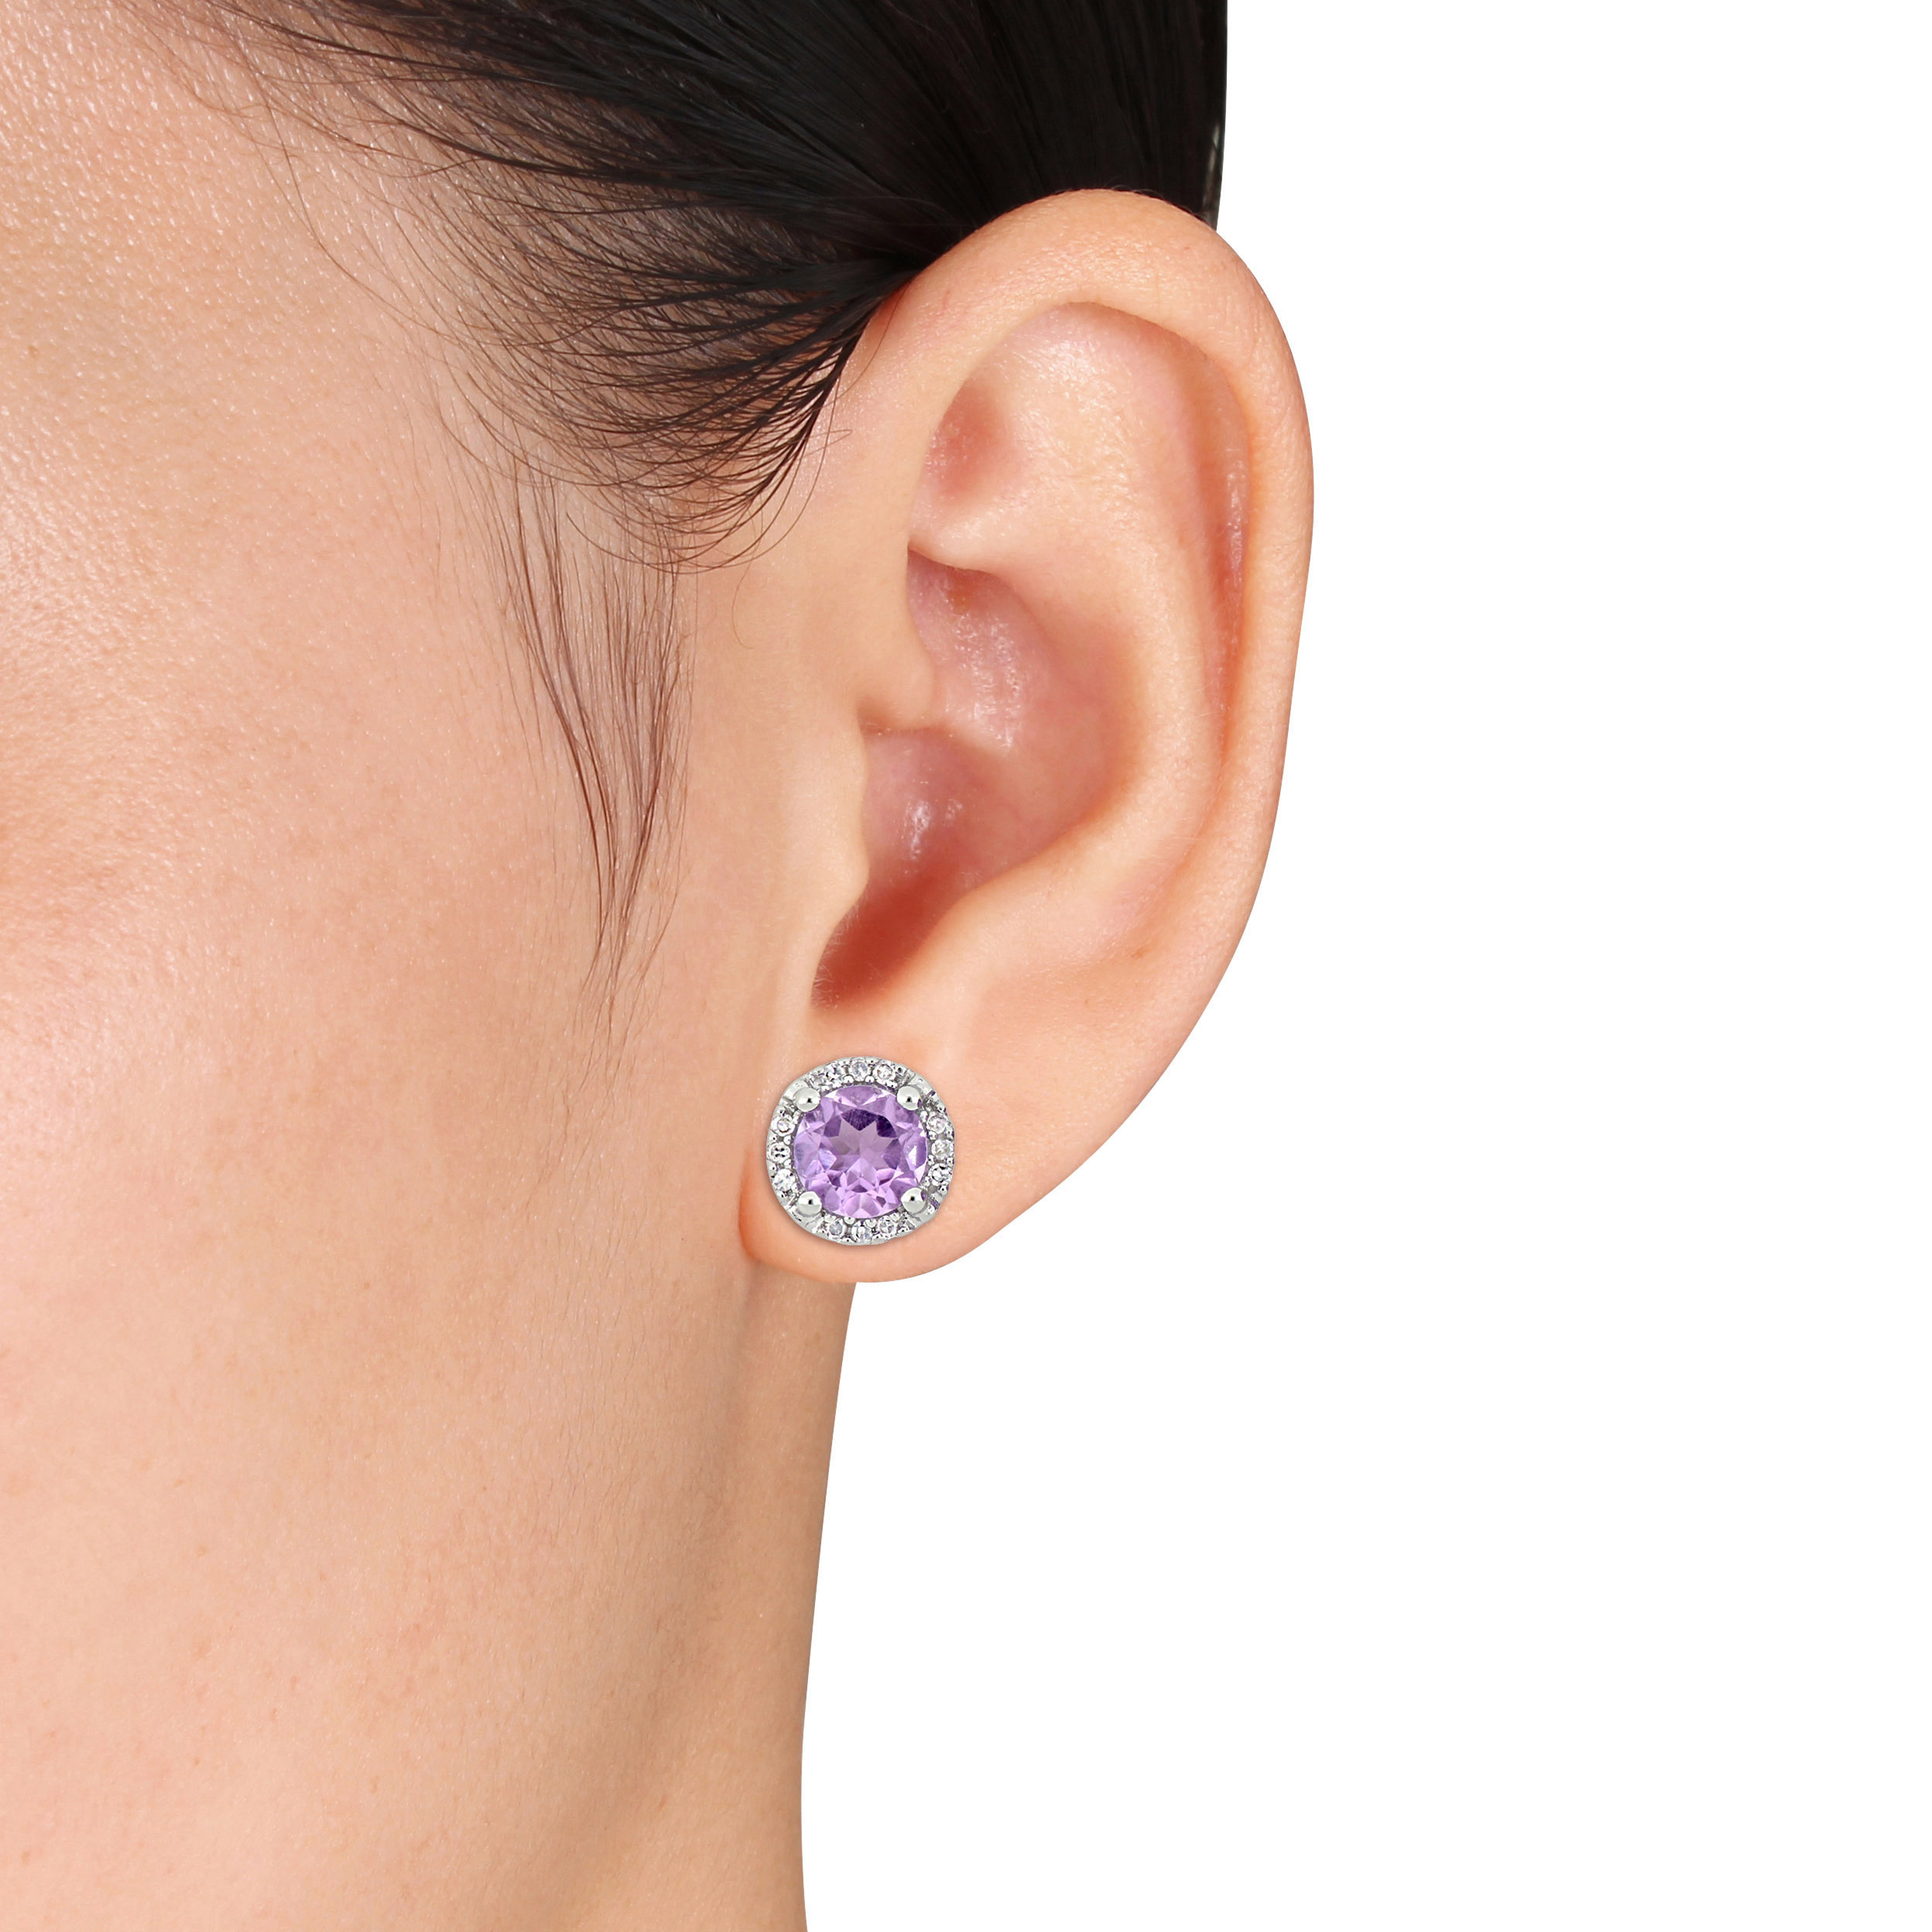 Amethyst Halo Earrings with Diamonds in 10k White Gold